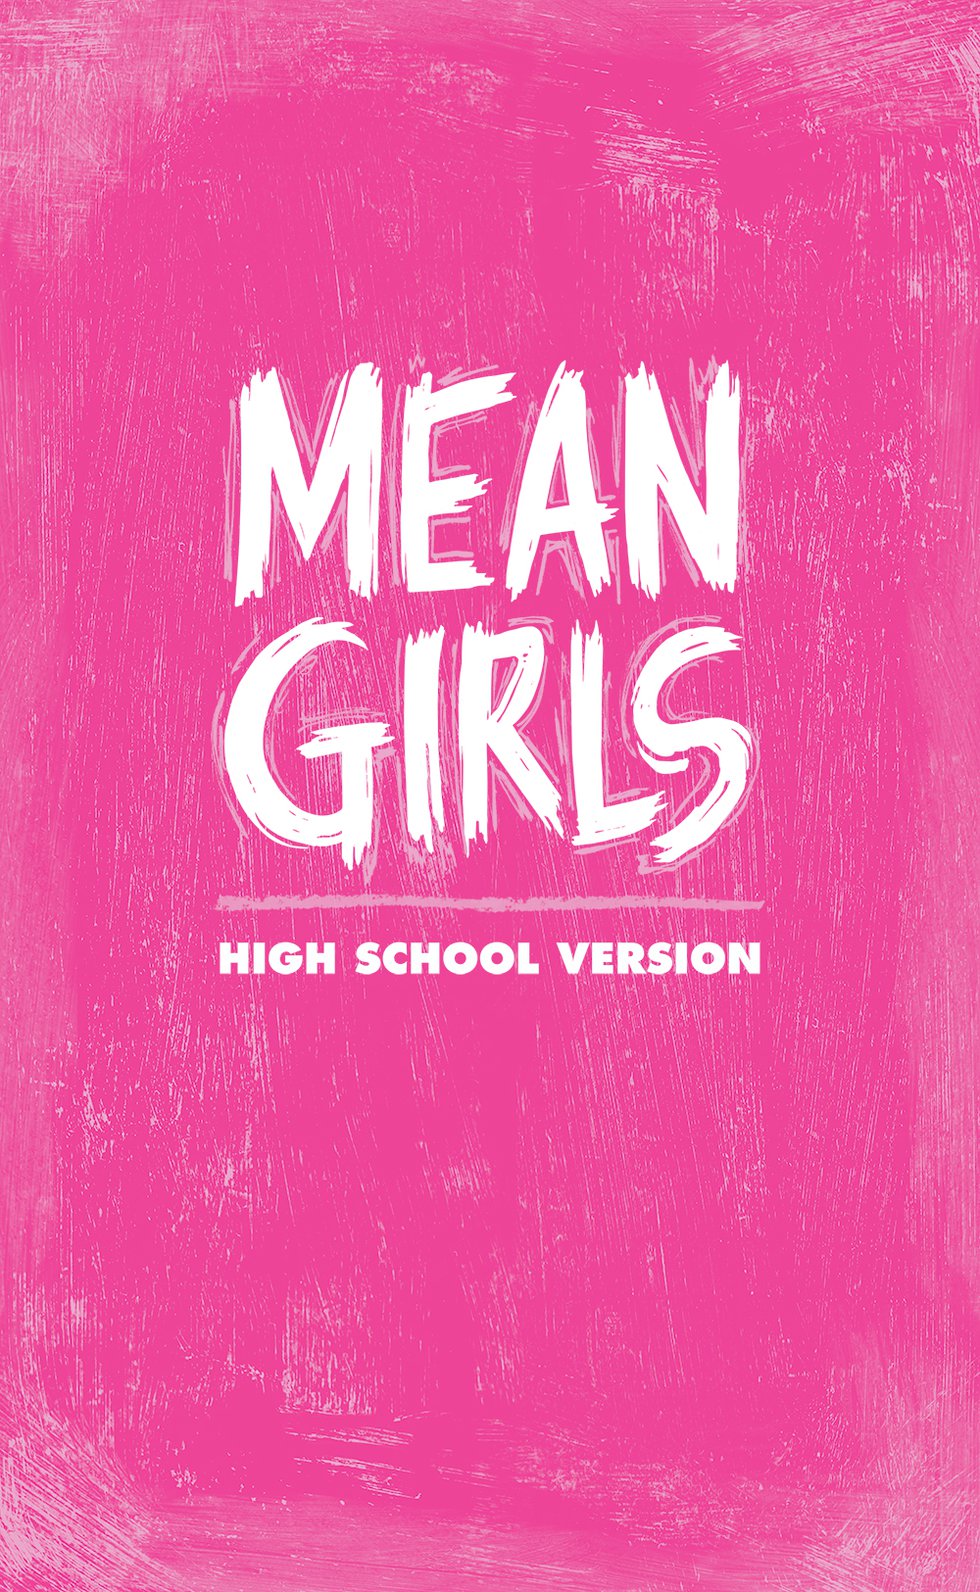 Mean Girls_HSV_EXT_PNK BG.jpg